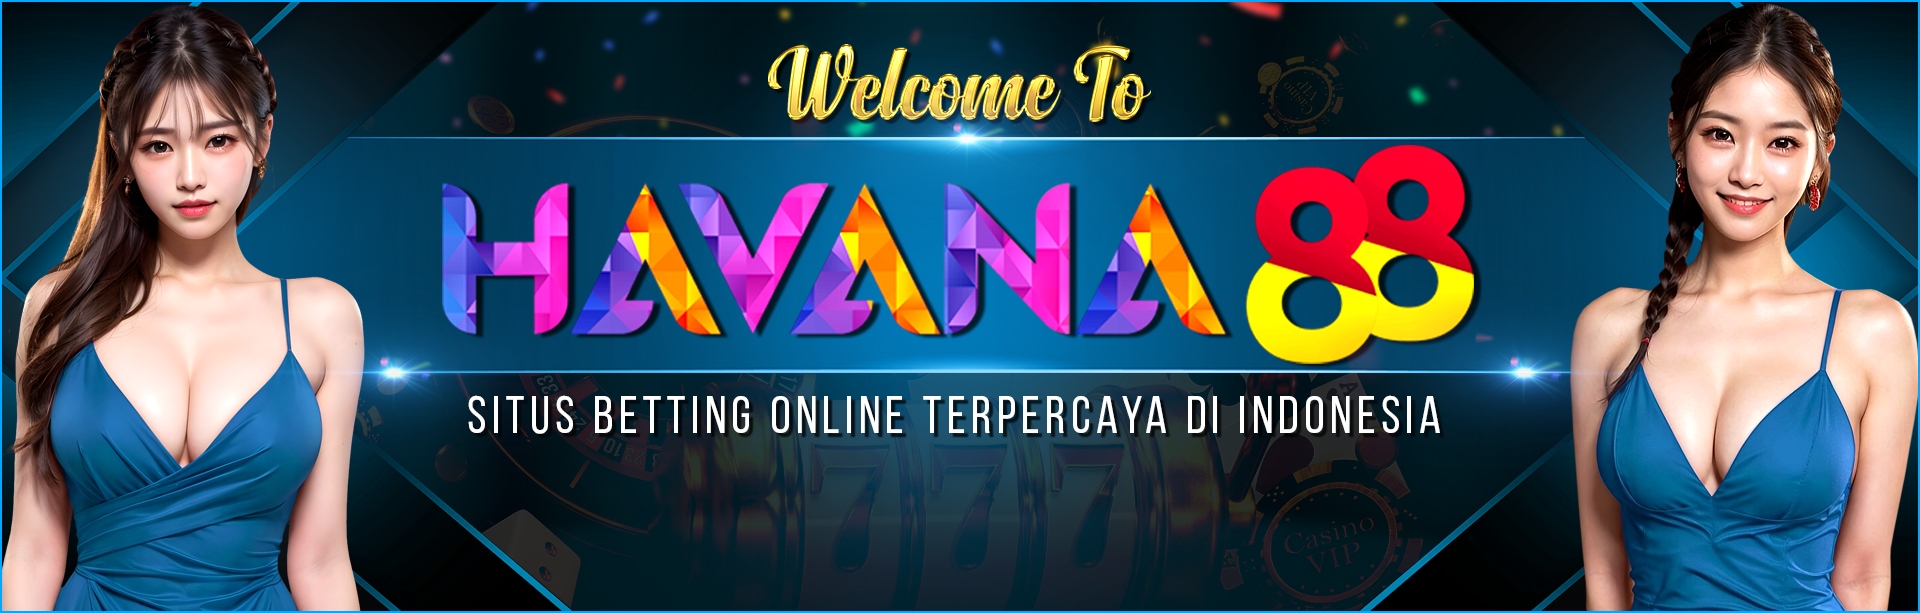 WELCOME TO HAVANA